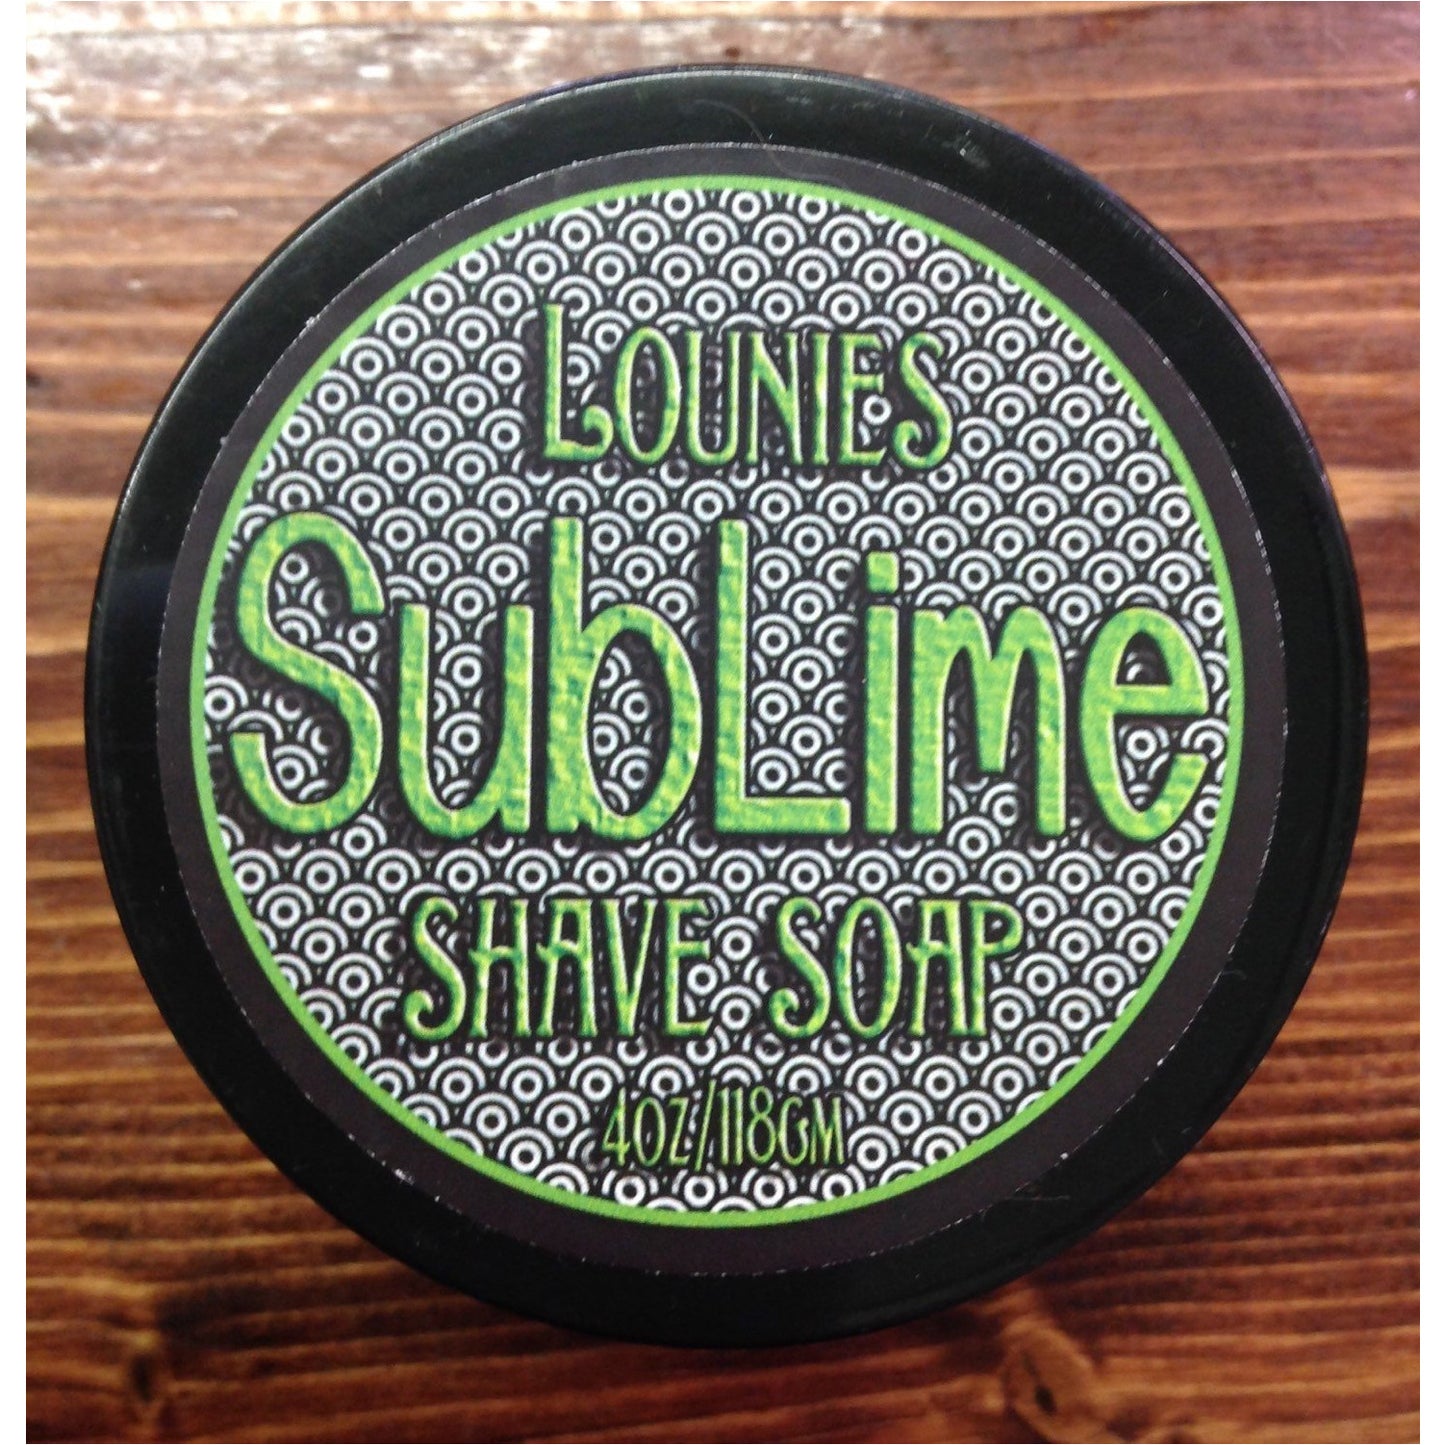 SubLime Shave Soap